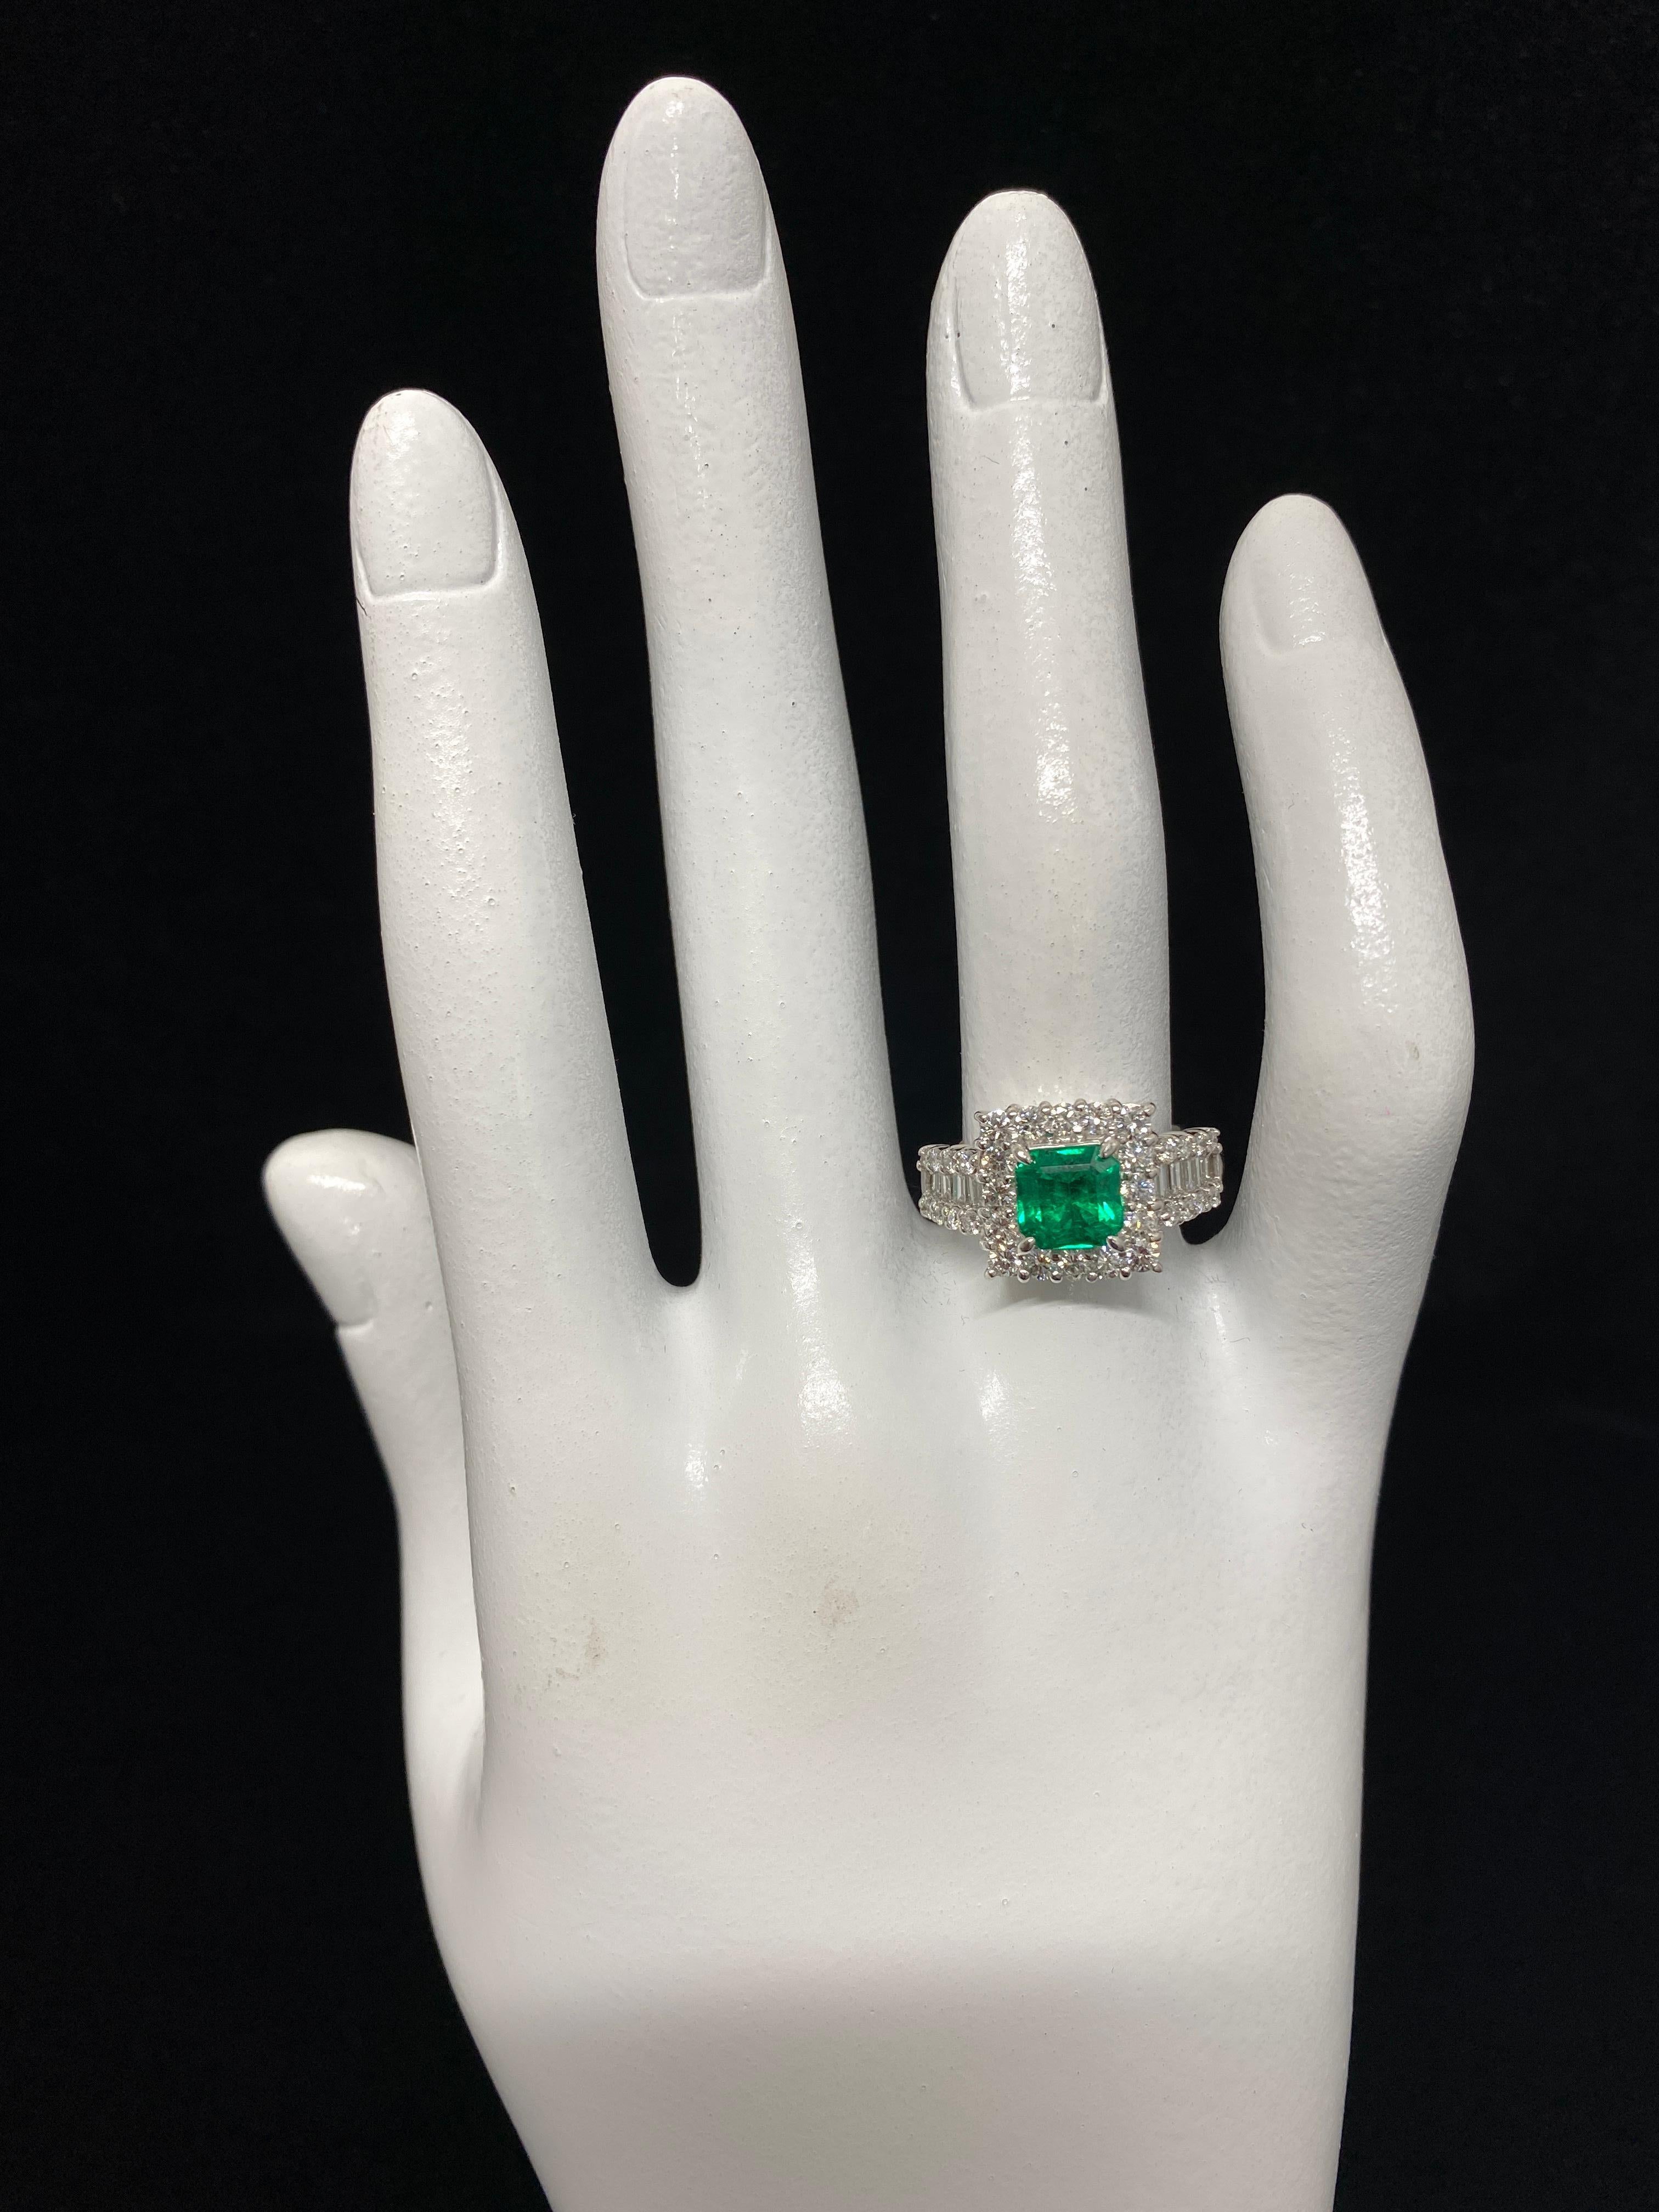 Emerald Cut GRS Certified 1.39 Carat Vivid Green Colombian Emerald Ring Set in Platinum